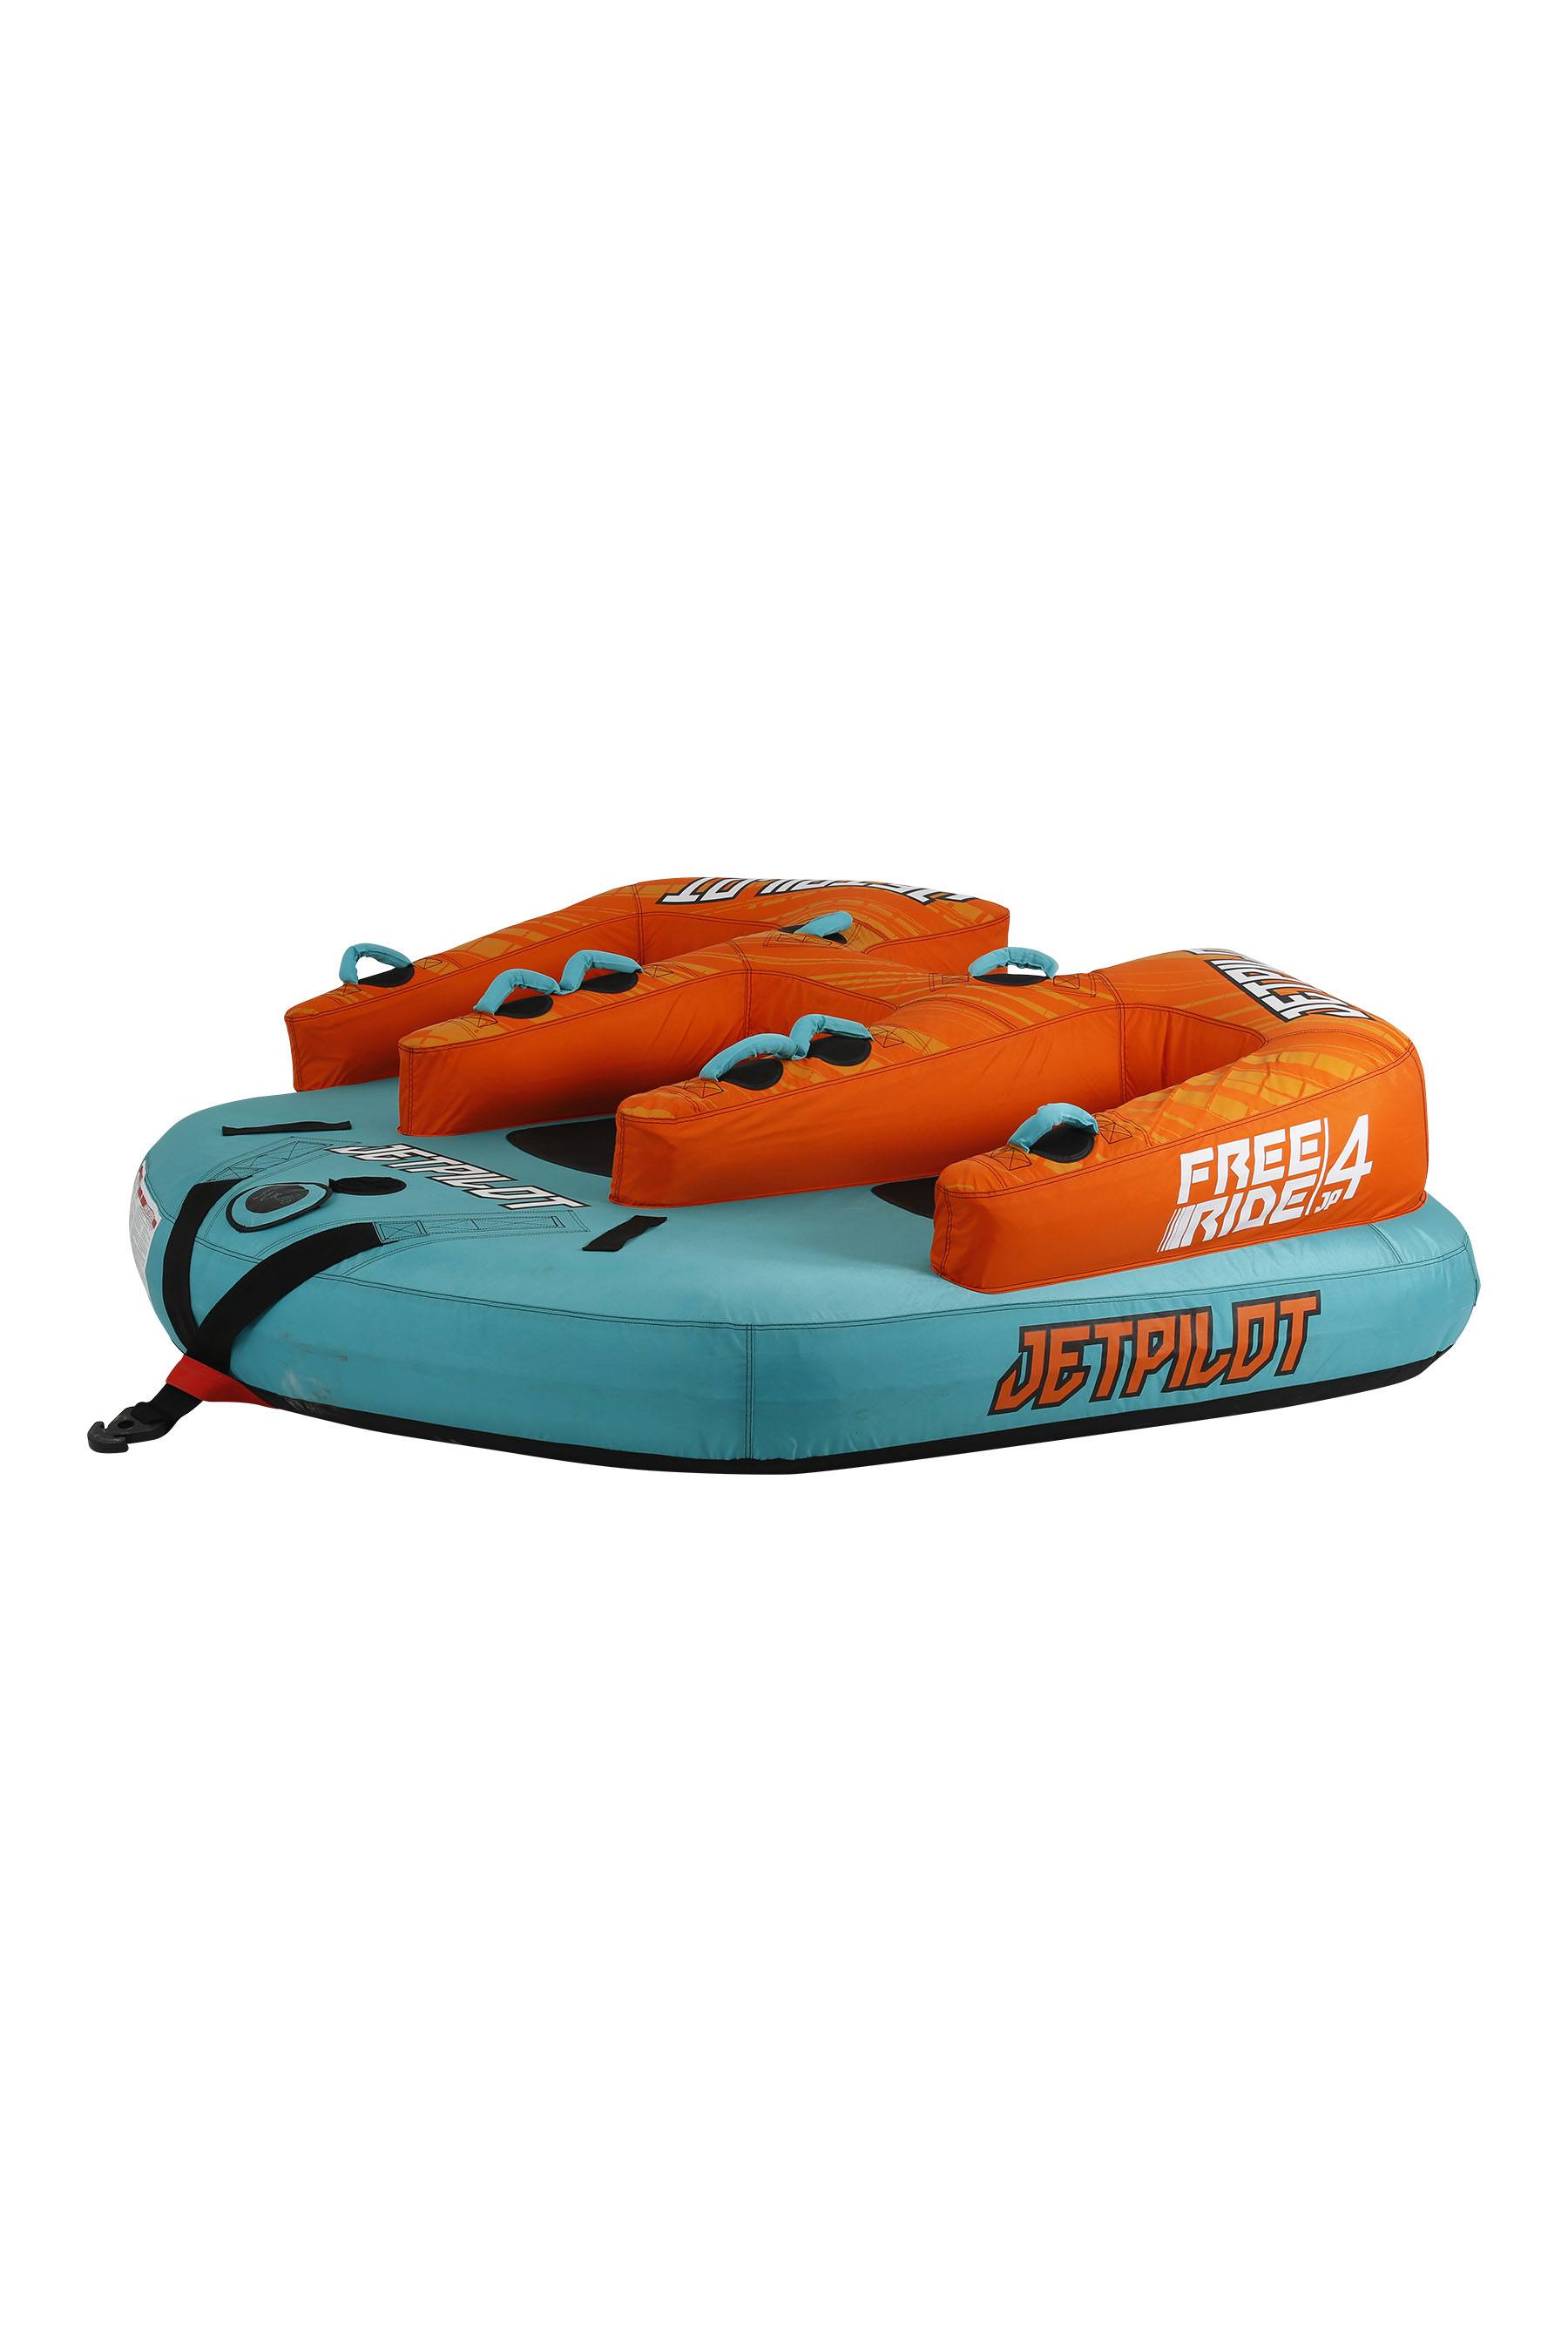 Jetpilot Freeride JP4 Towable - Teal/Orange 6